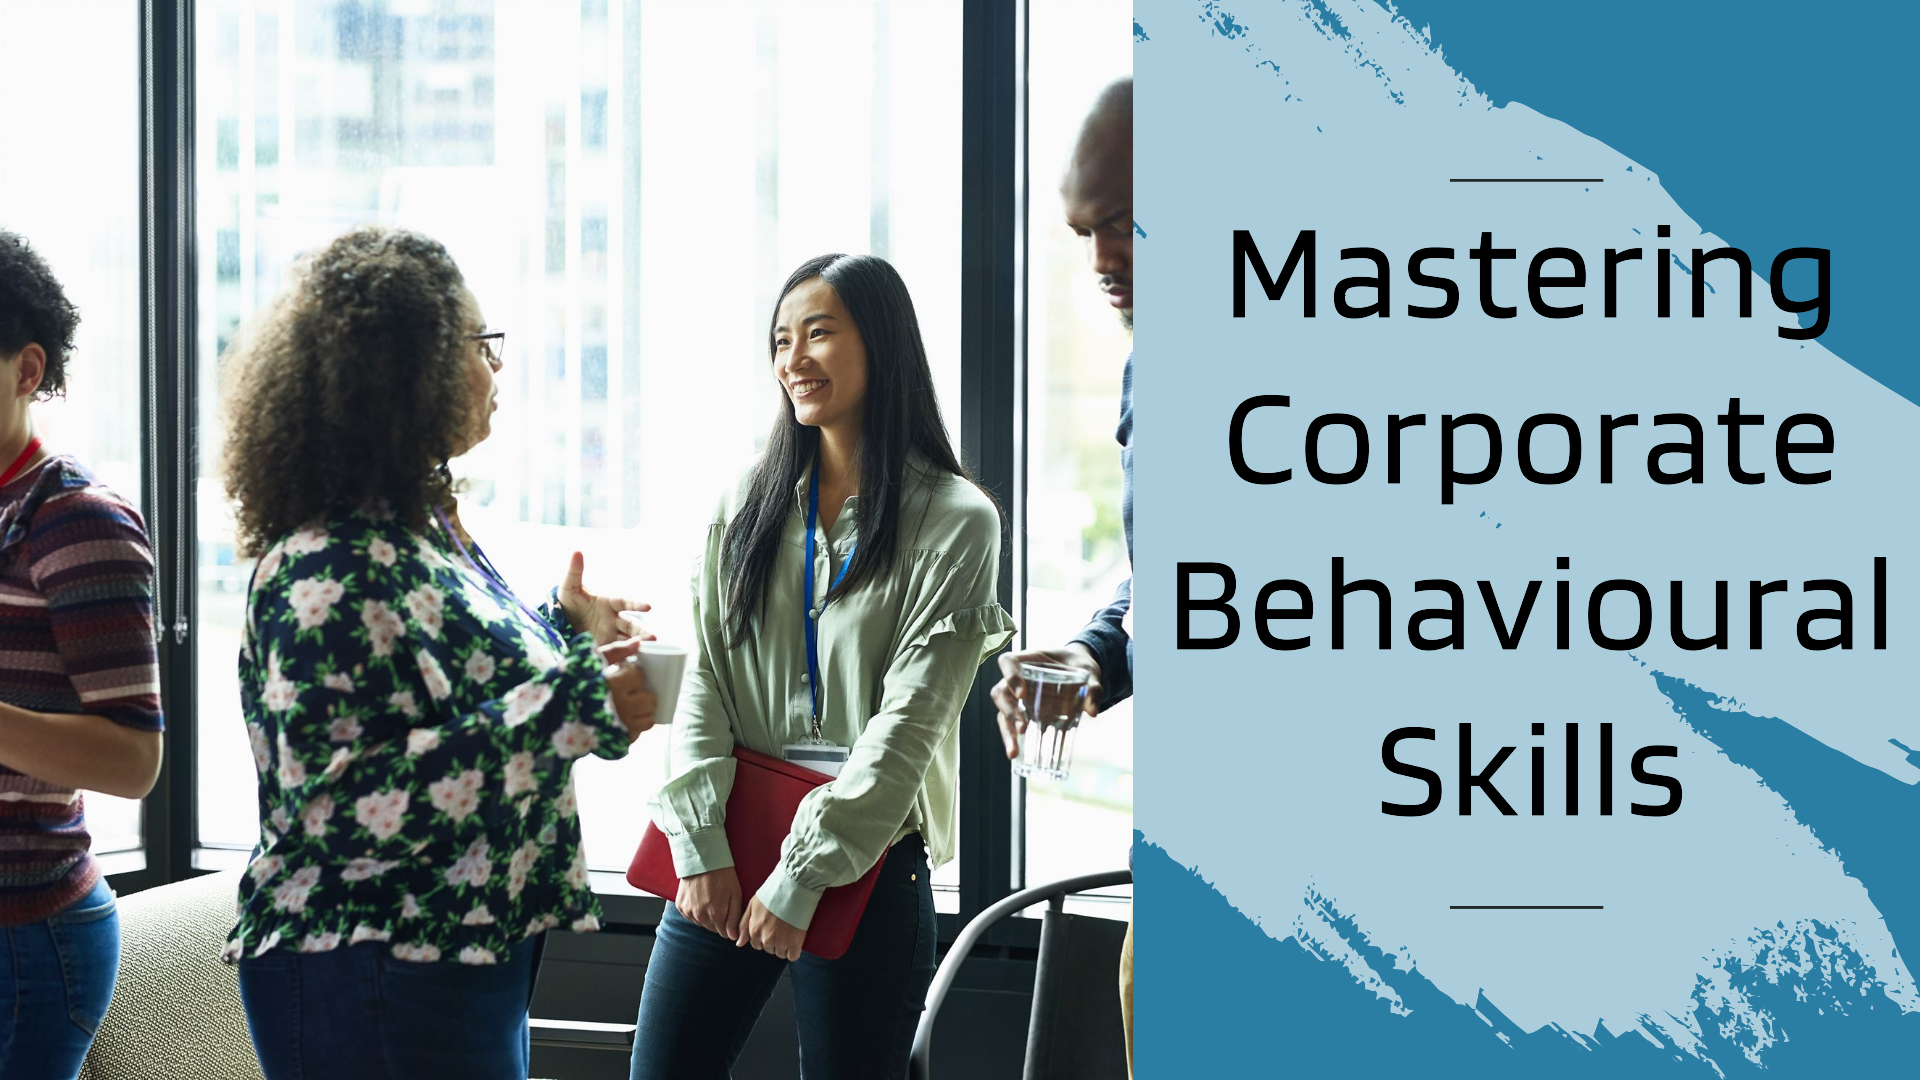 Corporate Behavioural Skills Training and Employee Behavioural Training Agency